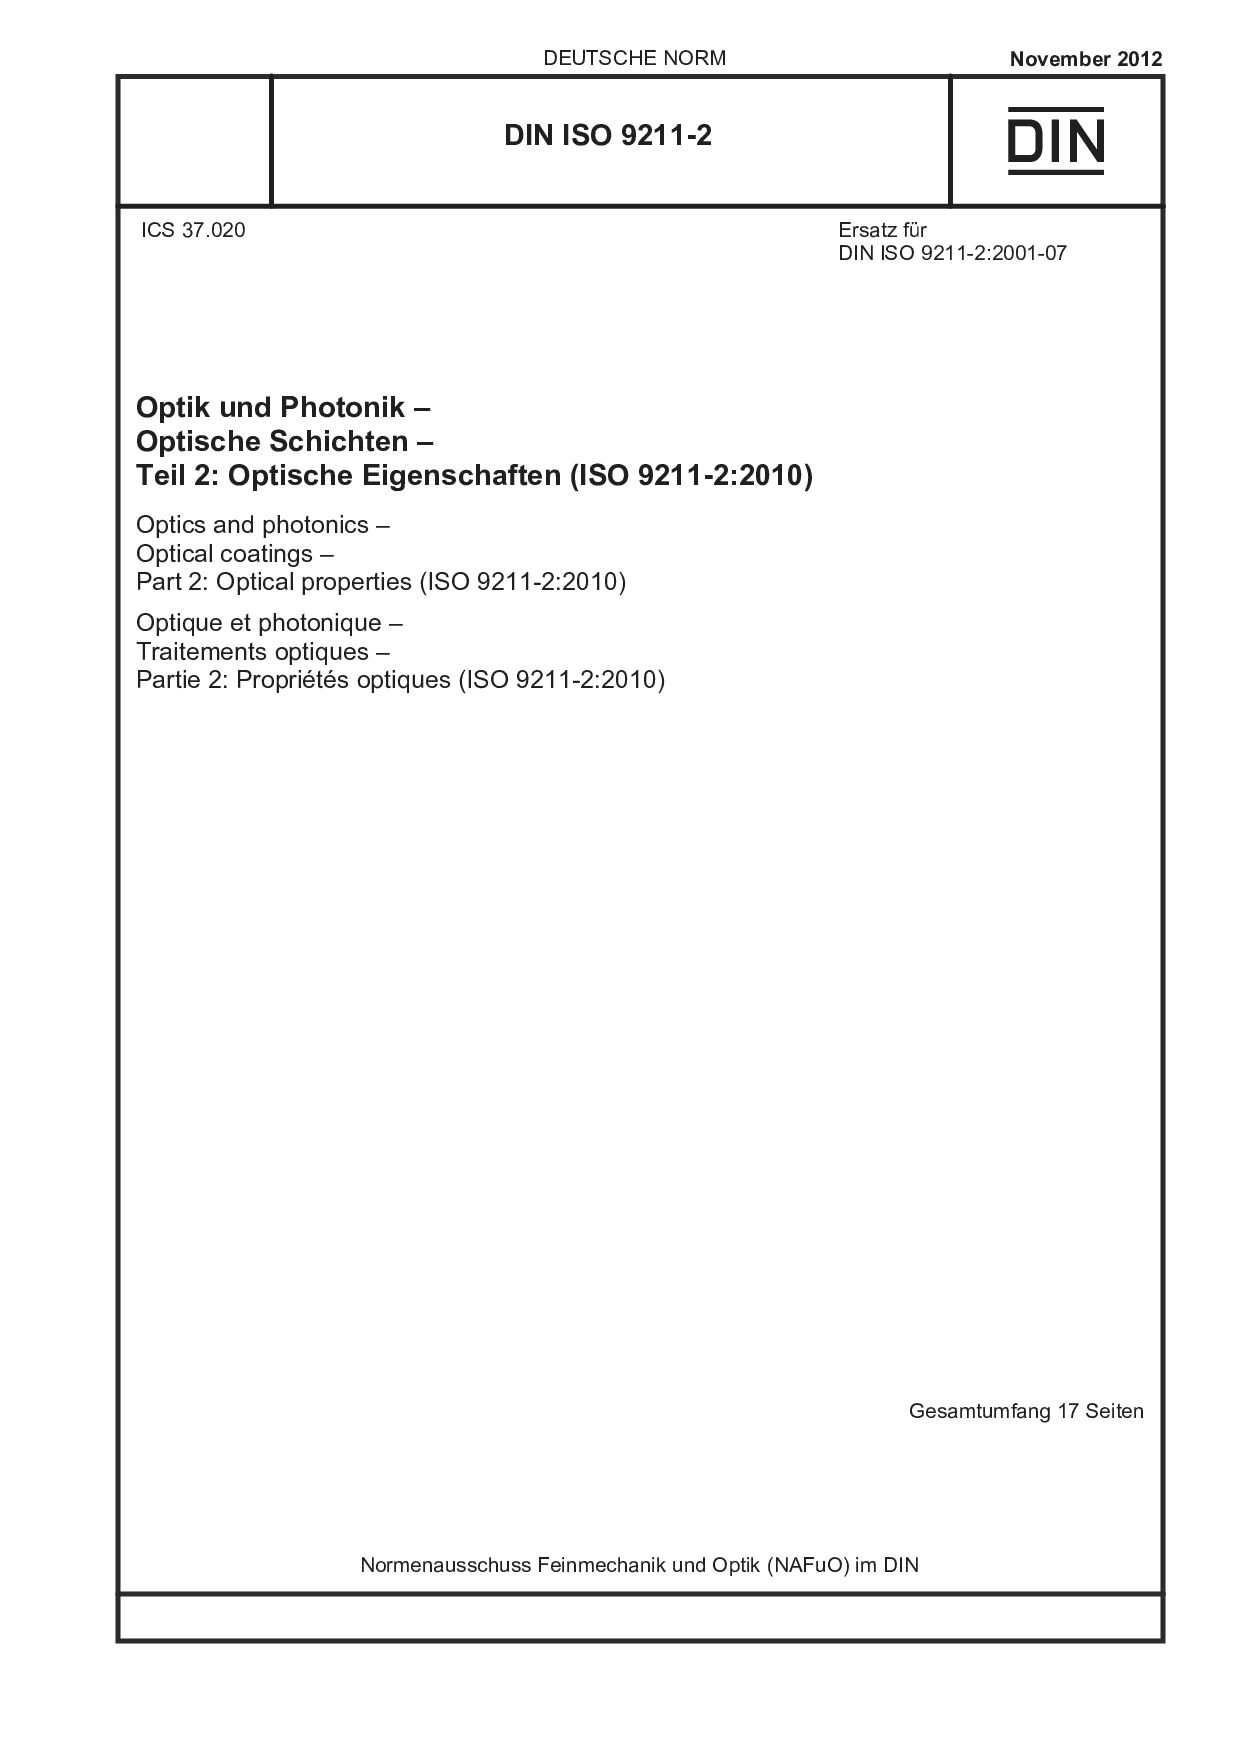 DIN ISO 9211-2:2012